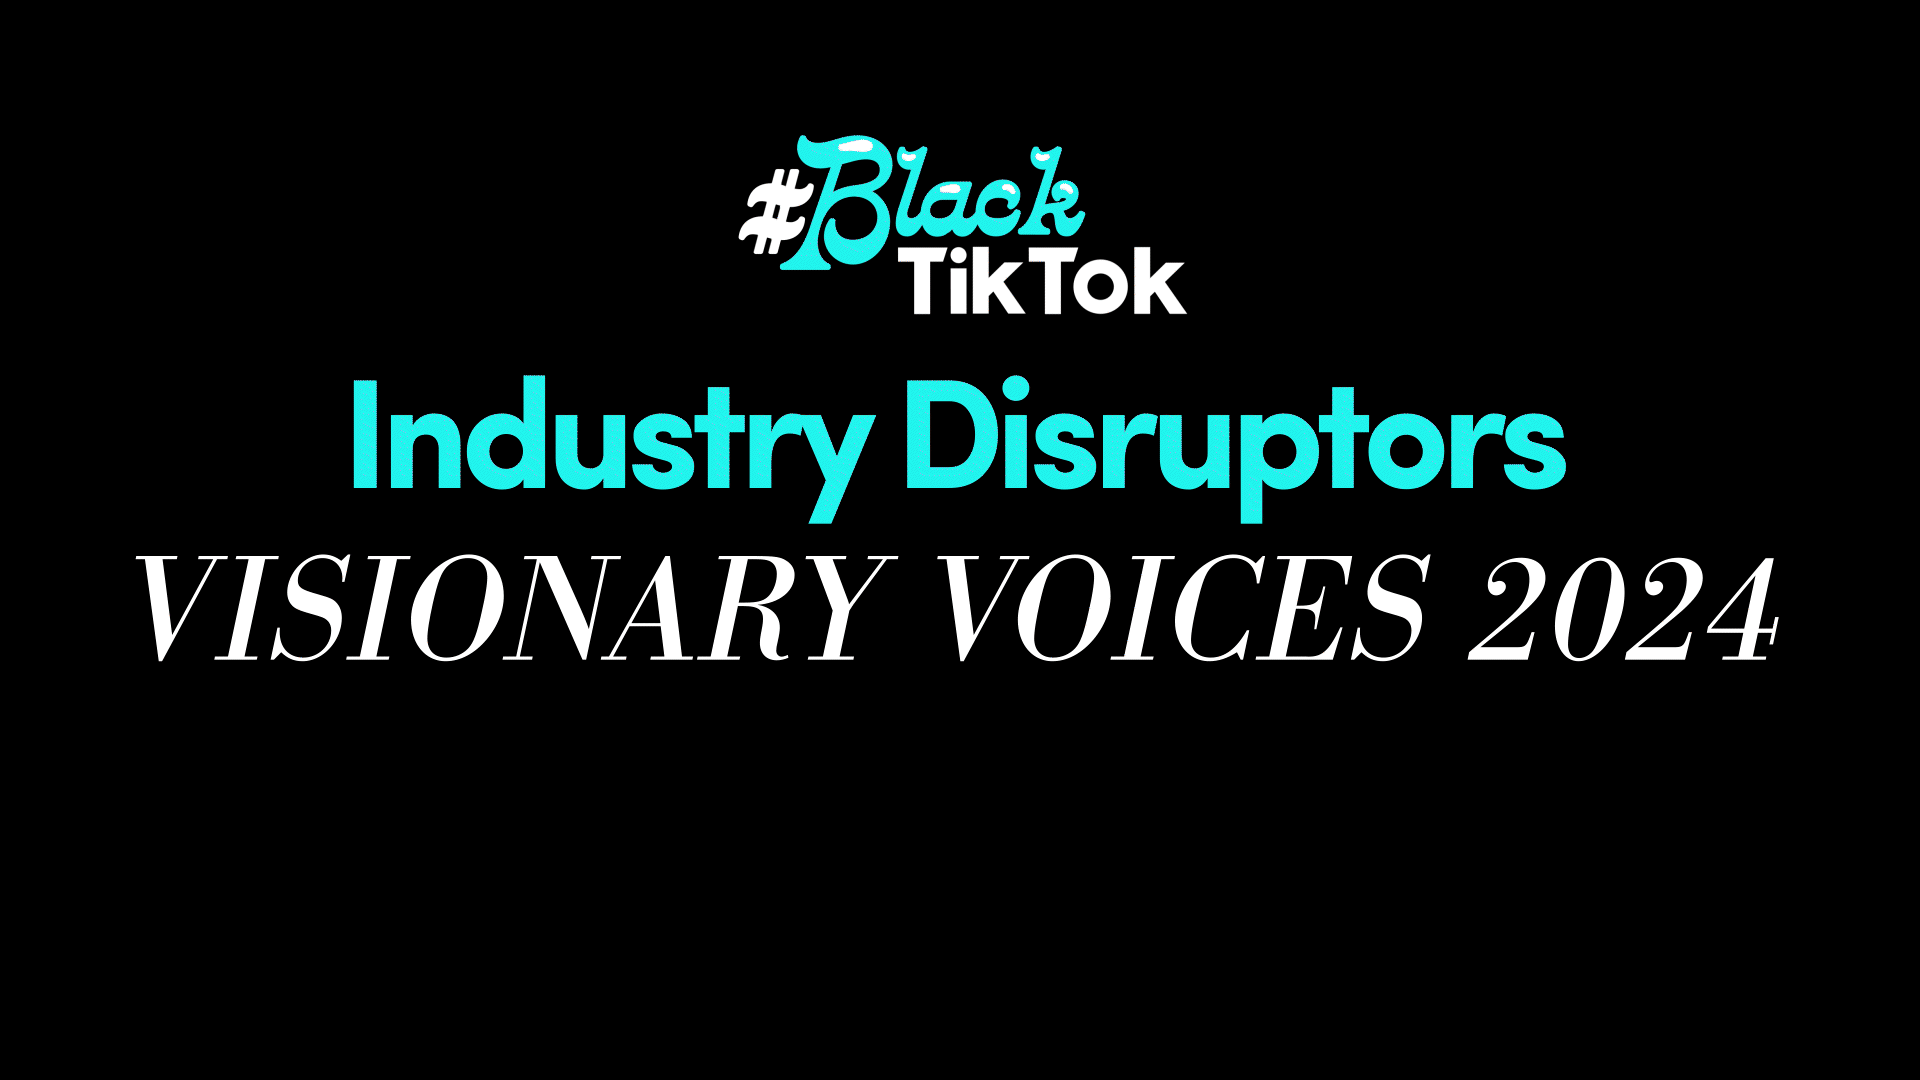 Tiktok visionary voices